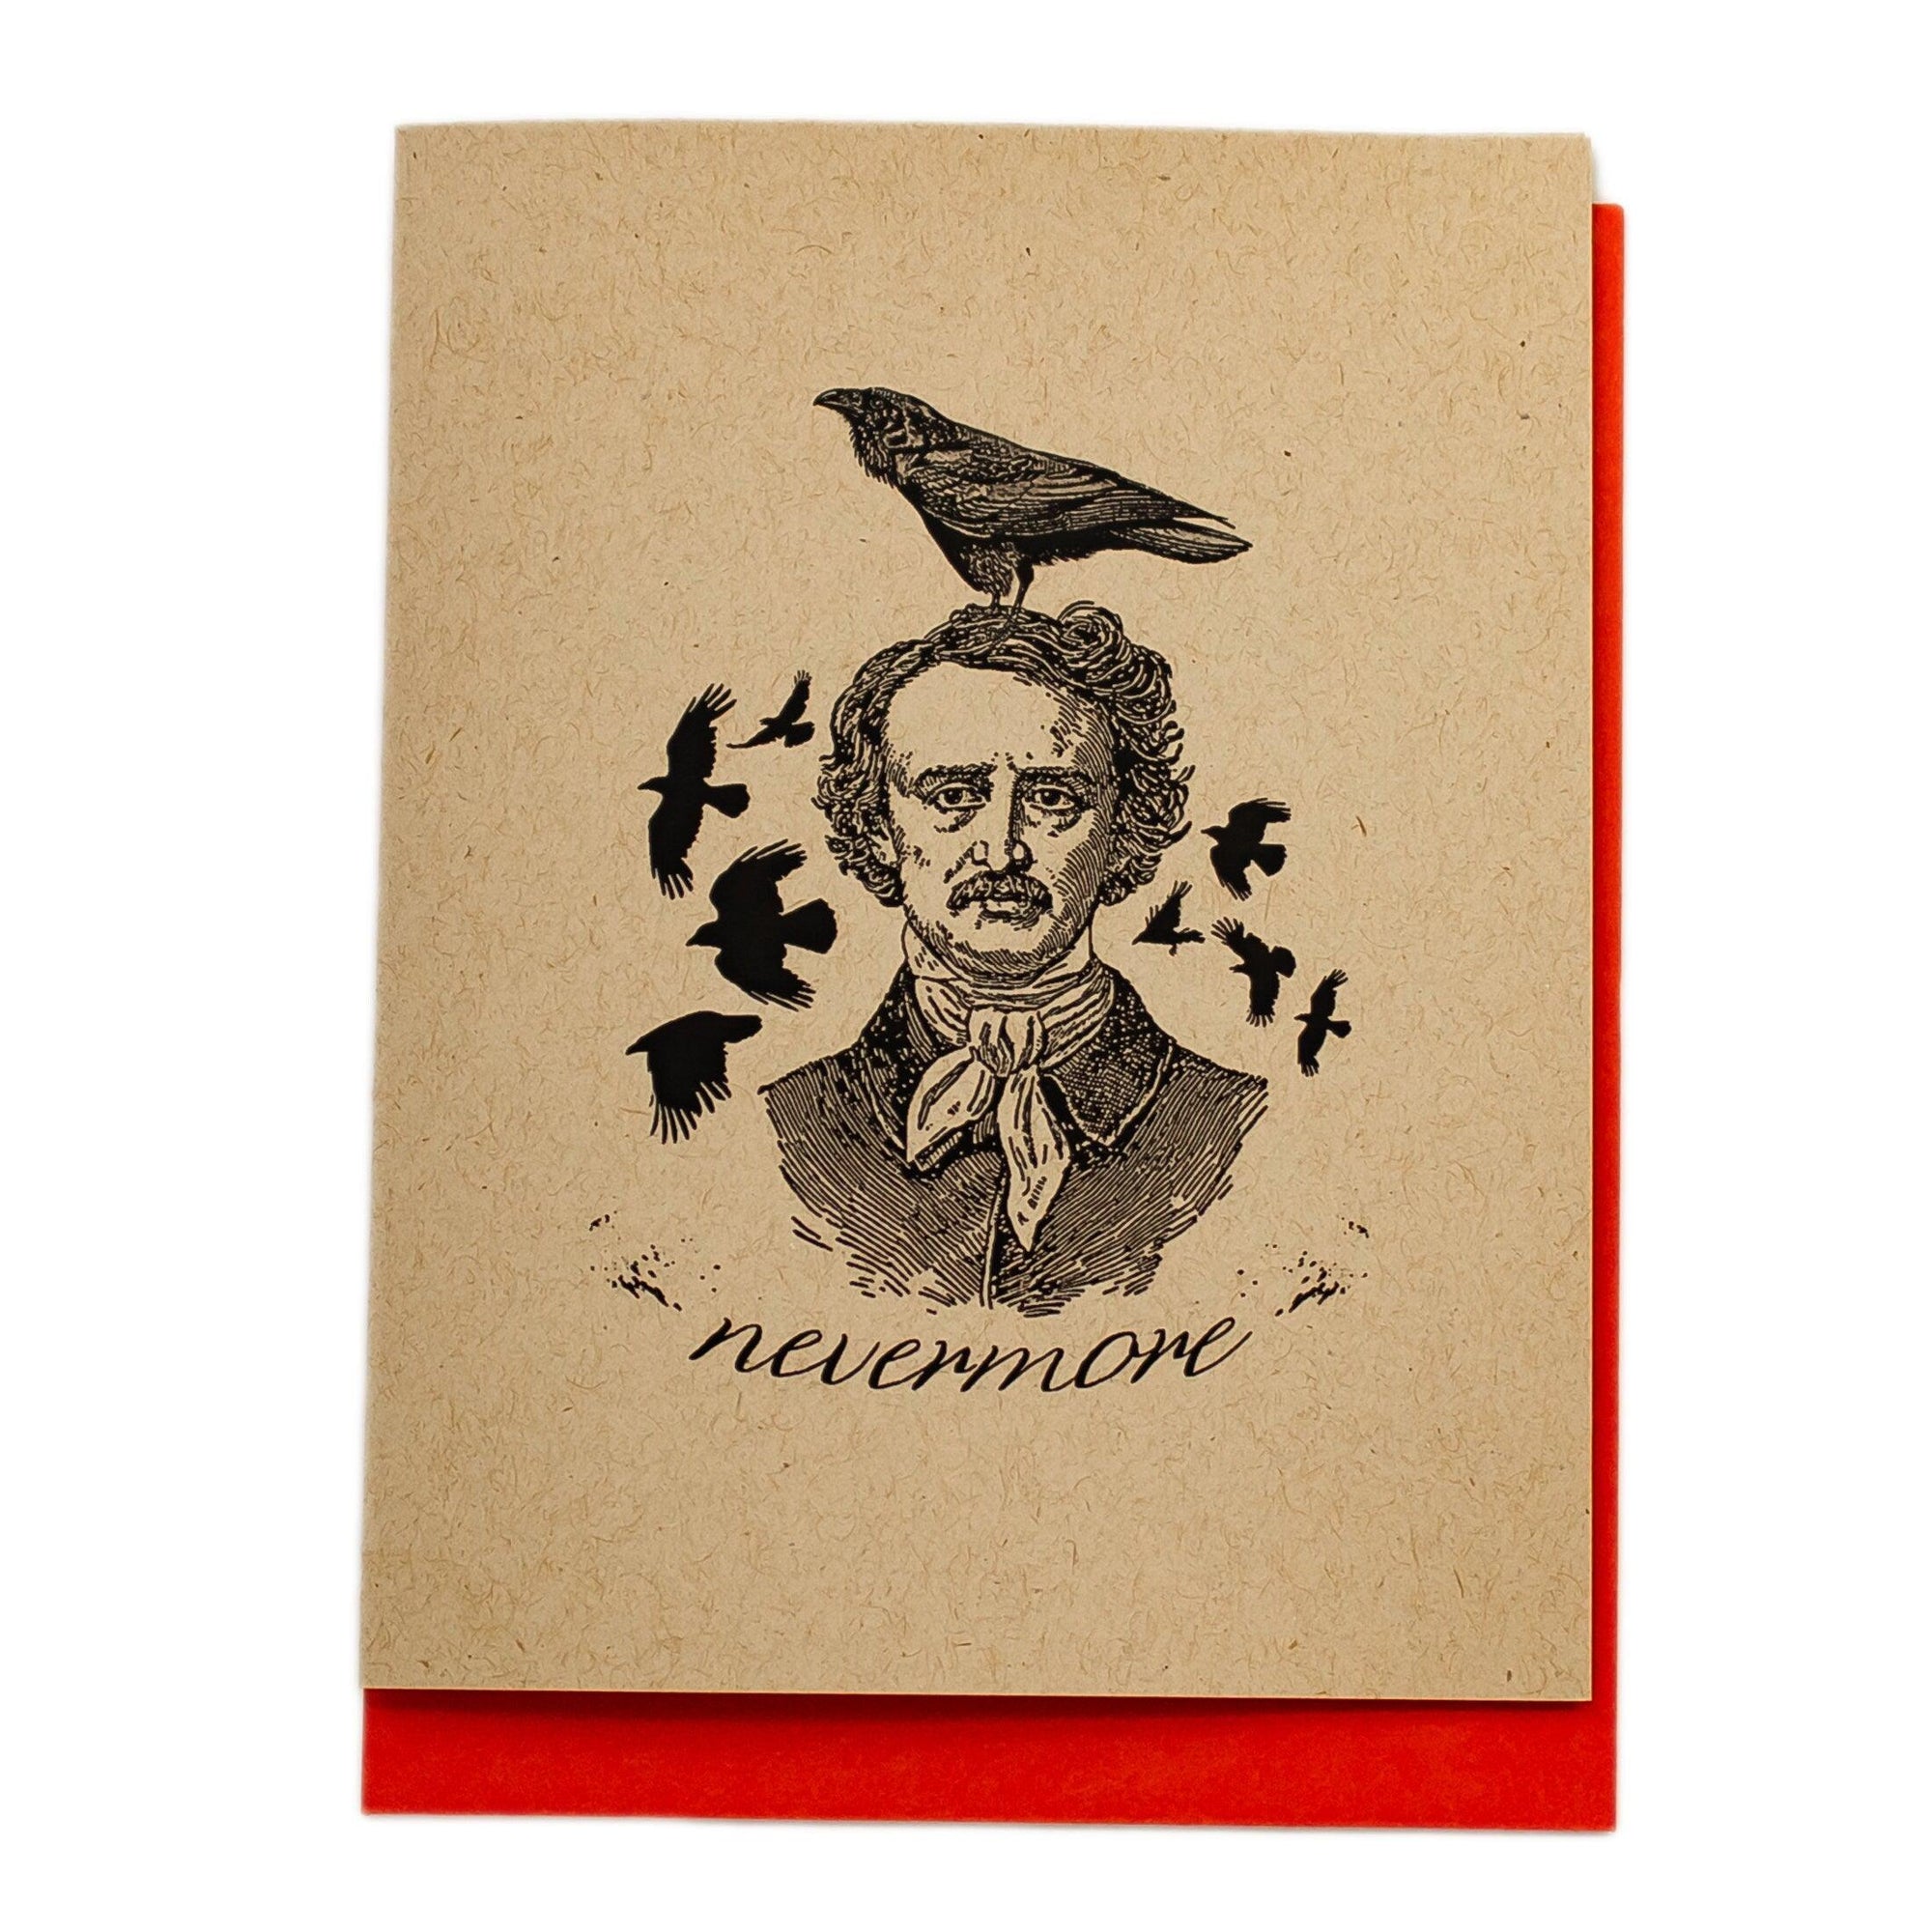 Literary Halloween Card - Edgar Allen Poe - The Raven - Nevermore - Classic Halloween Card